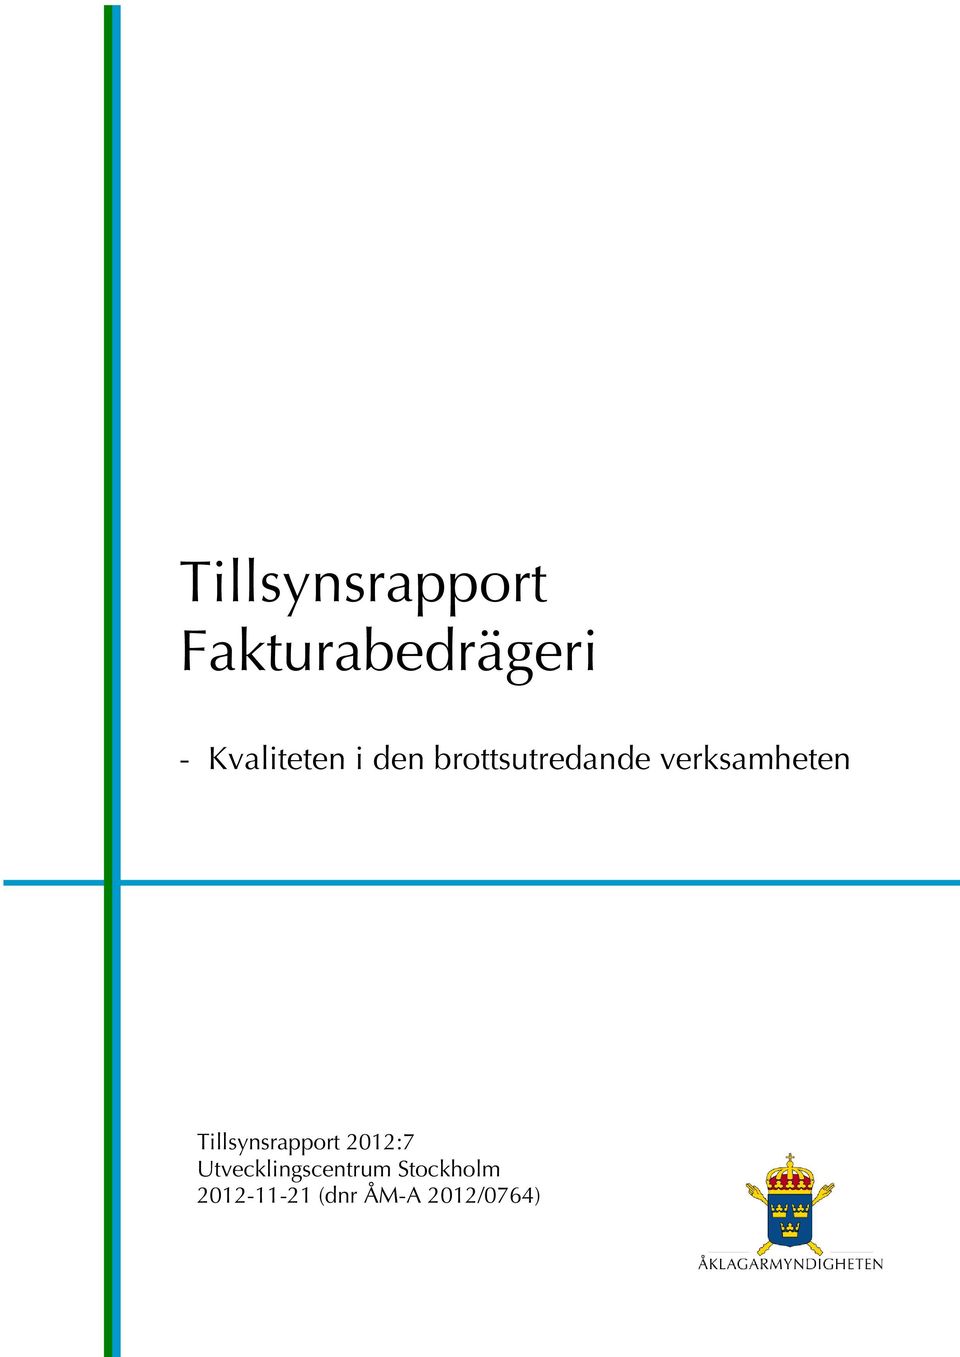 verksamheten Tillsynsrapport 2012:7